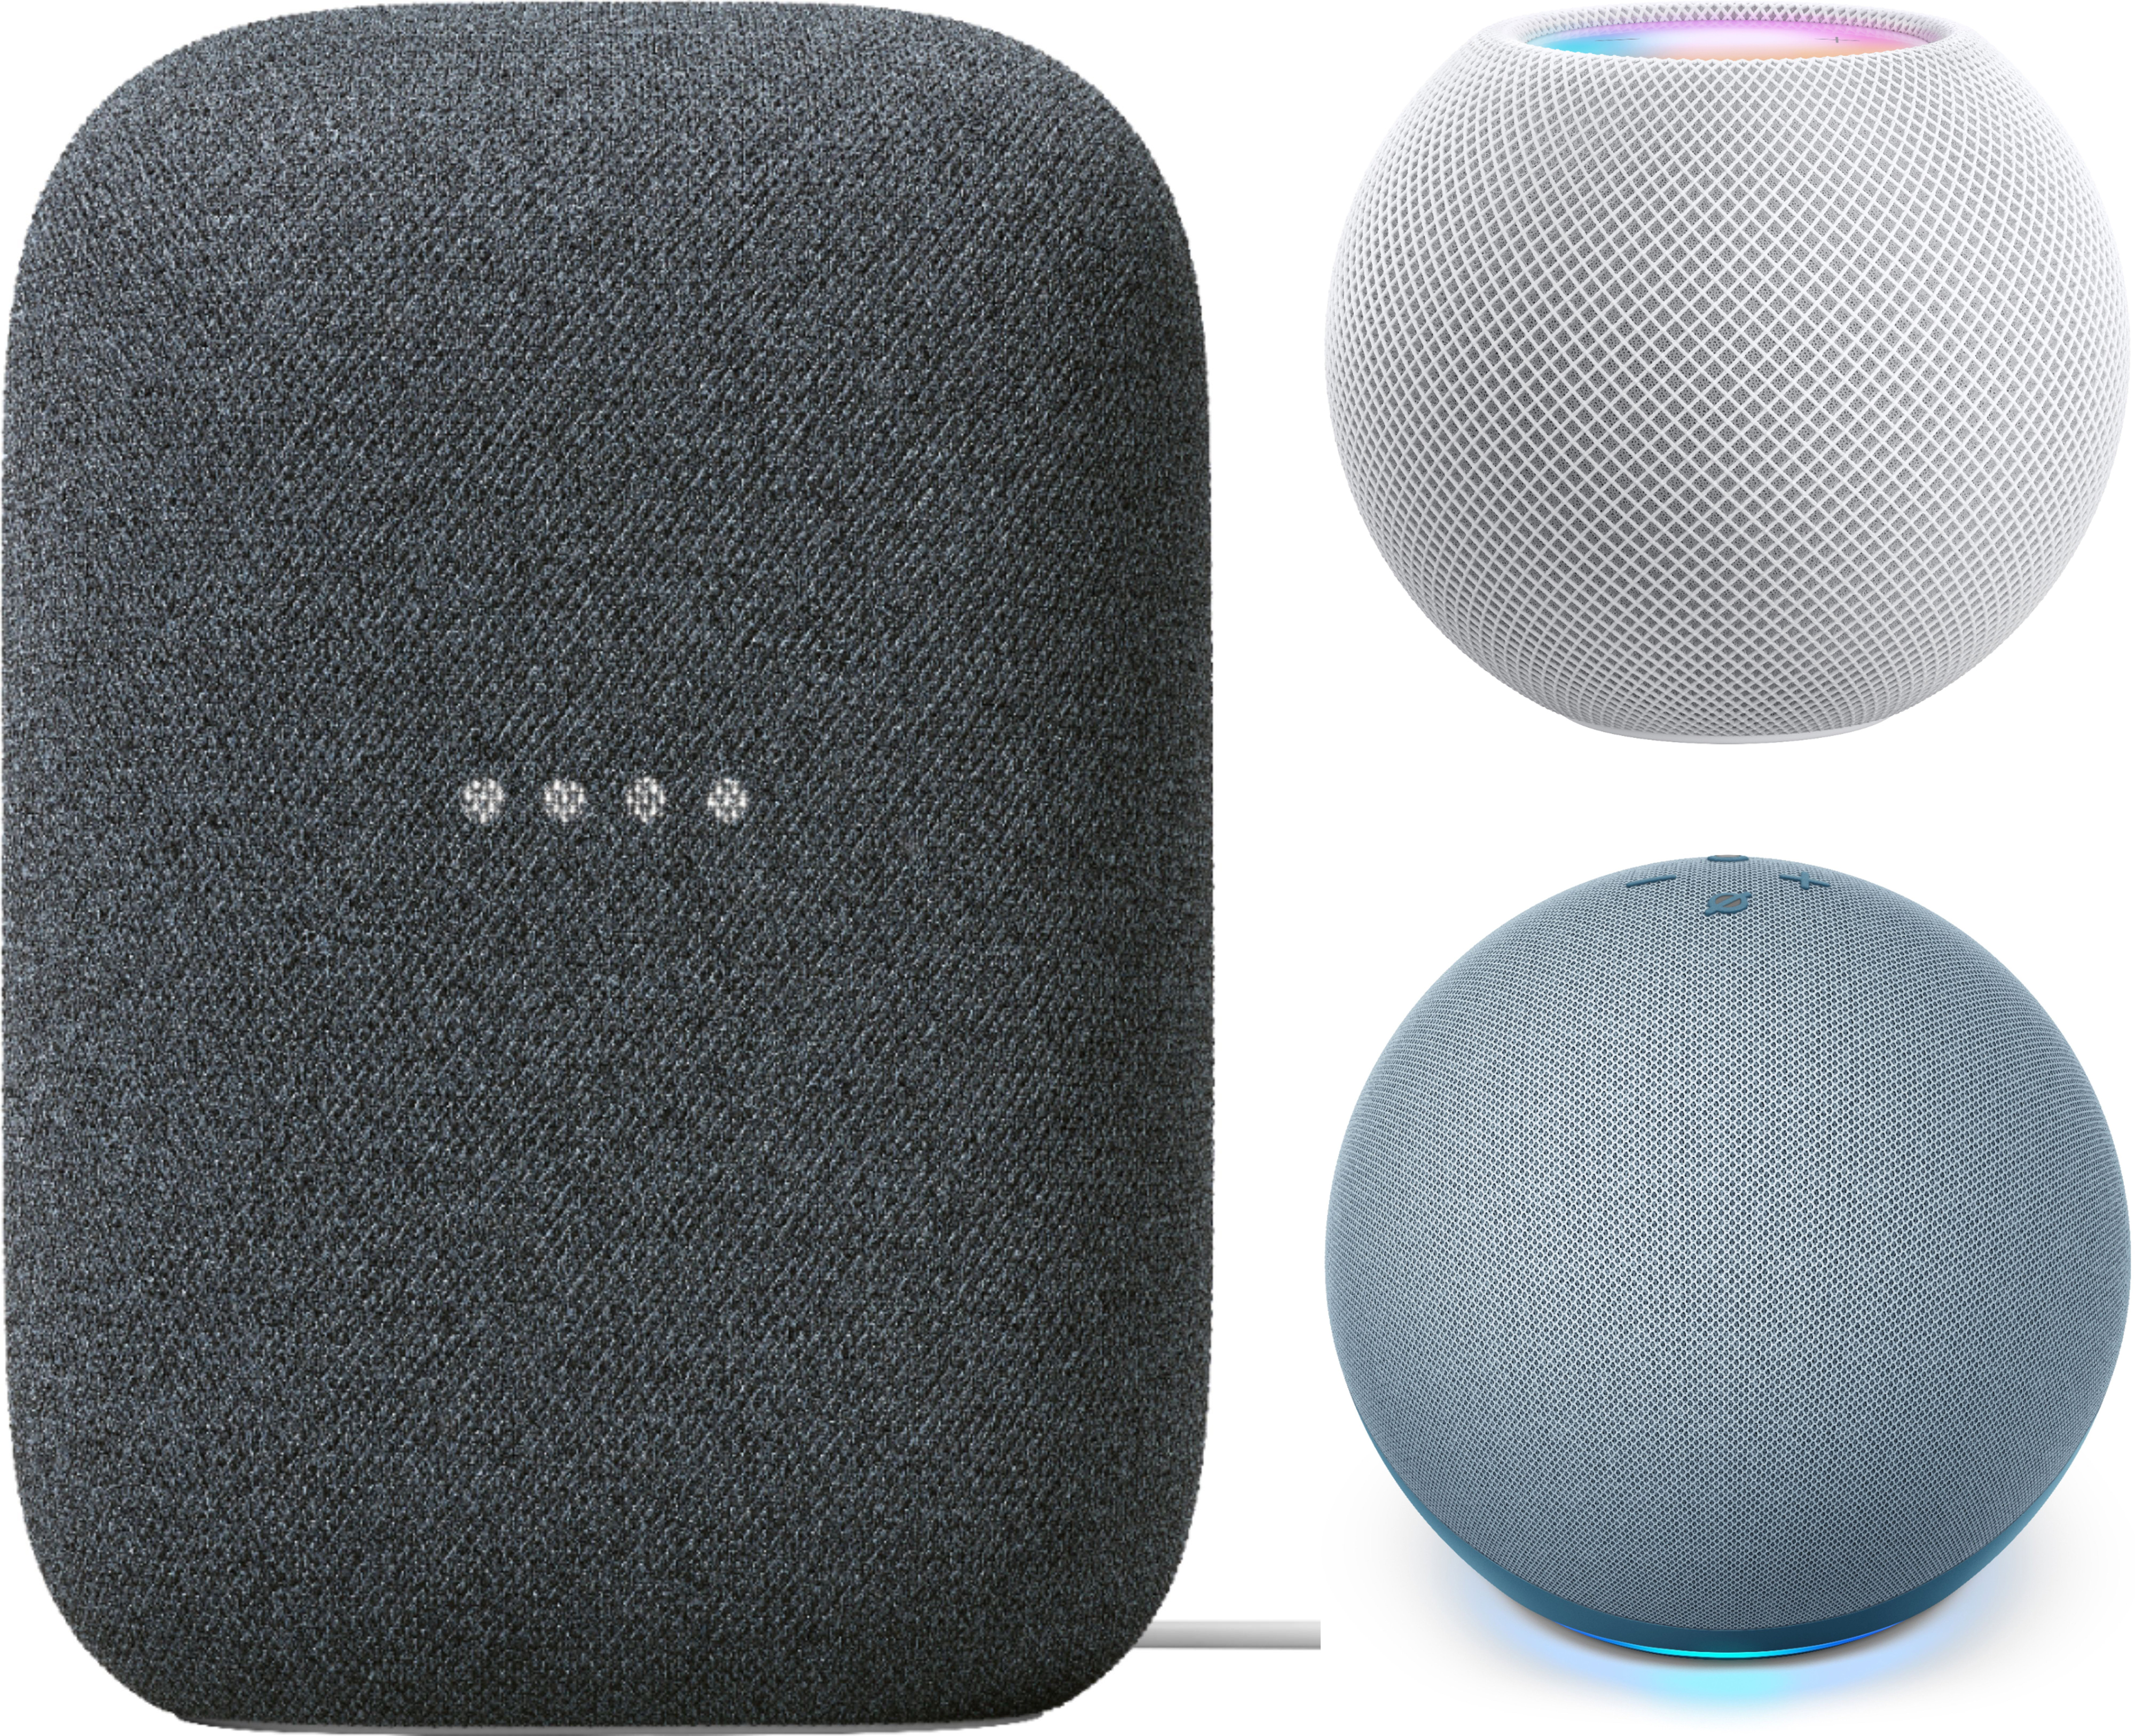 Top 3 smart speakers under $100 – Apple HomePod mini vs. Google Nest Audio vs. Amazon Echo 2020